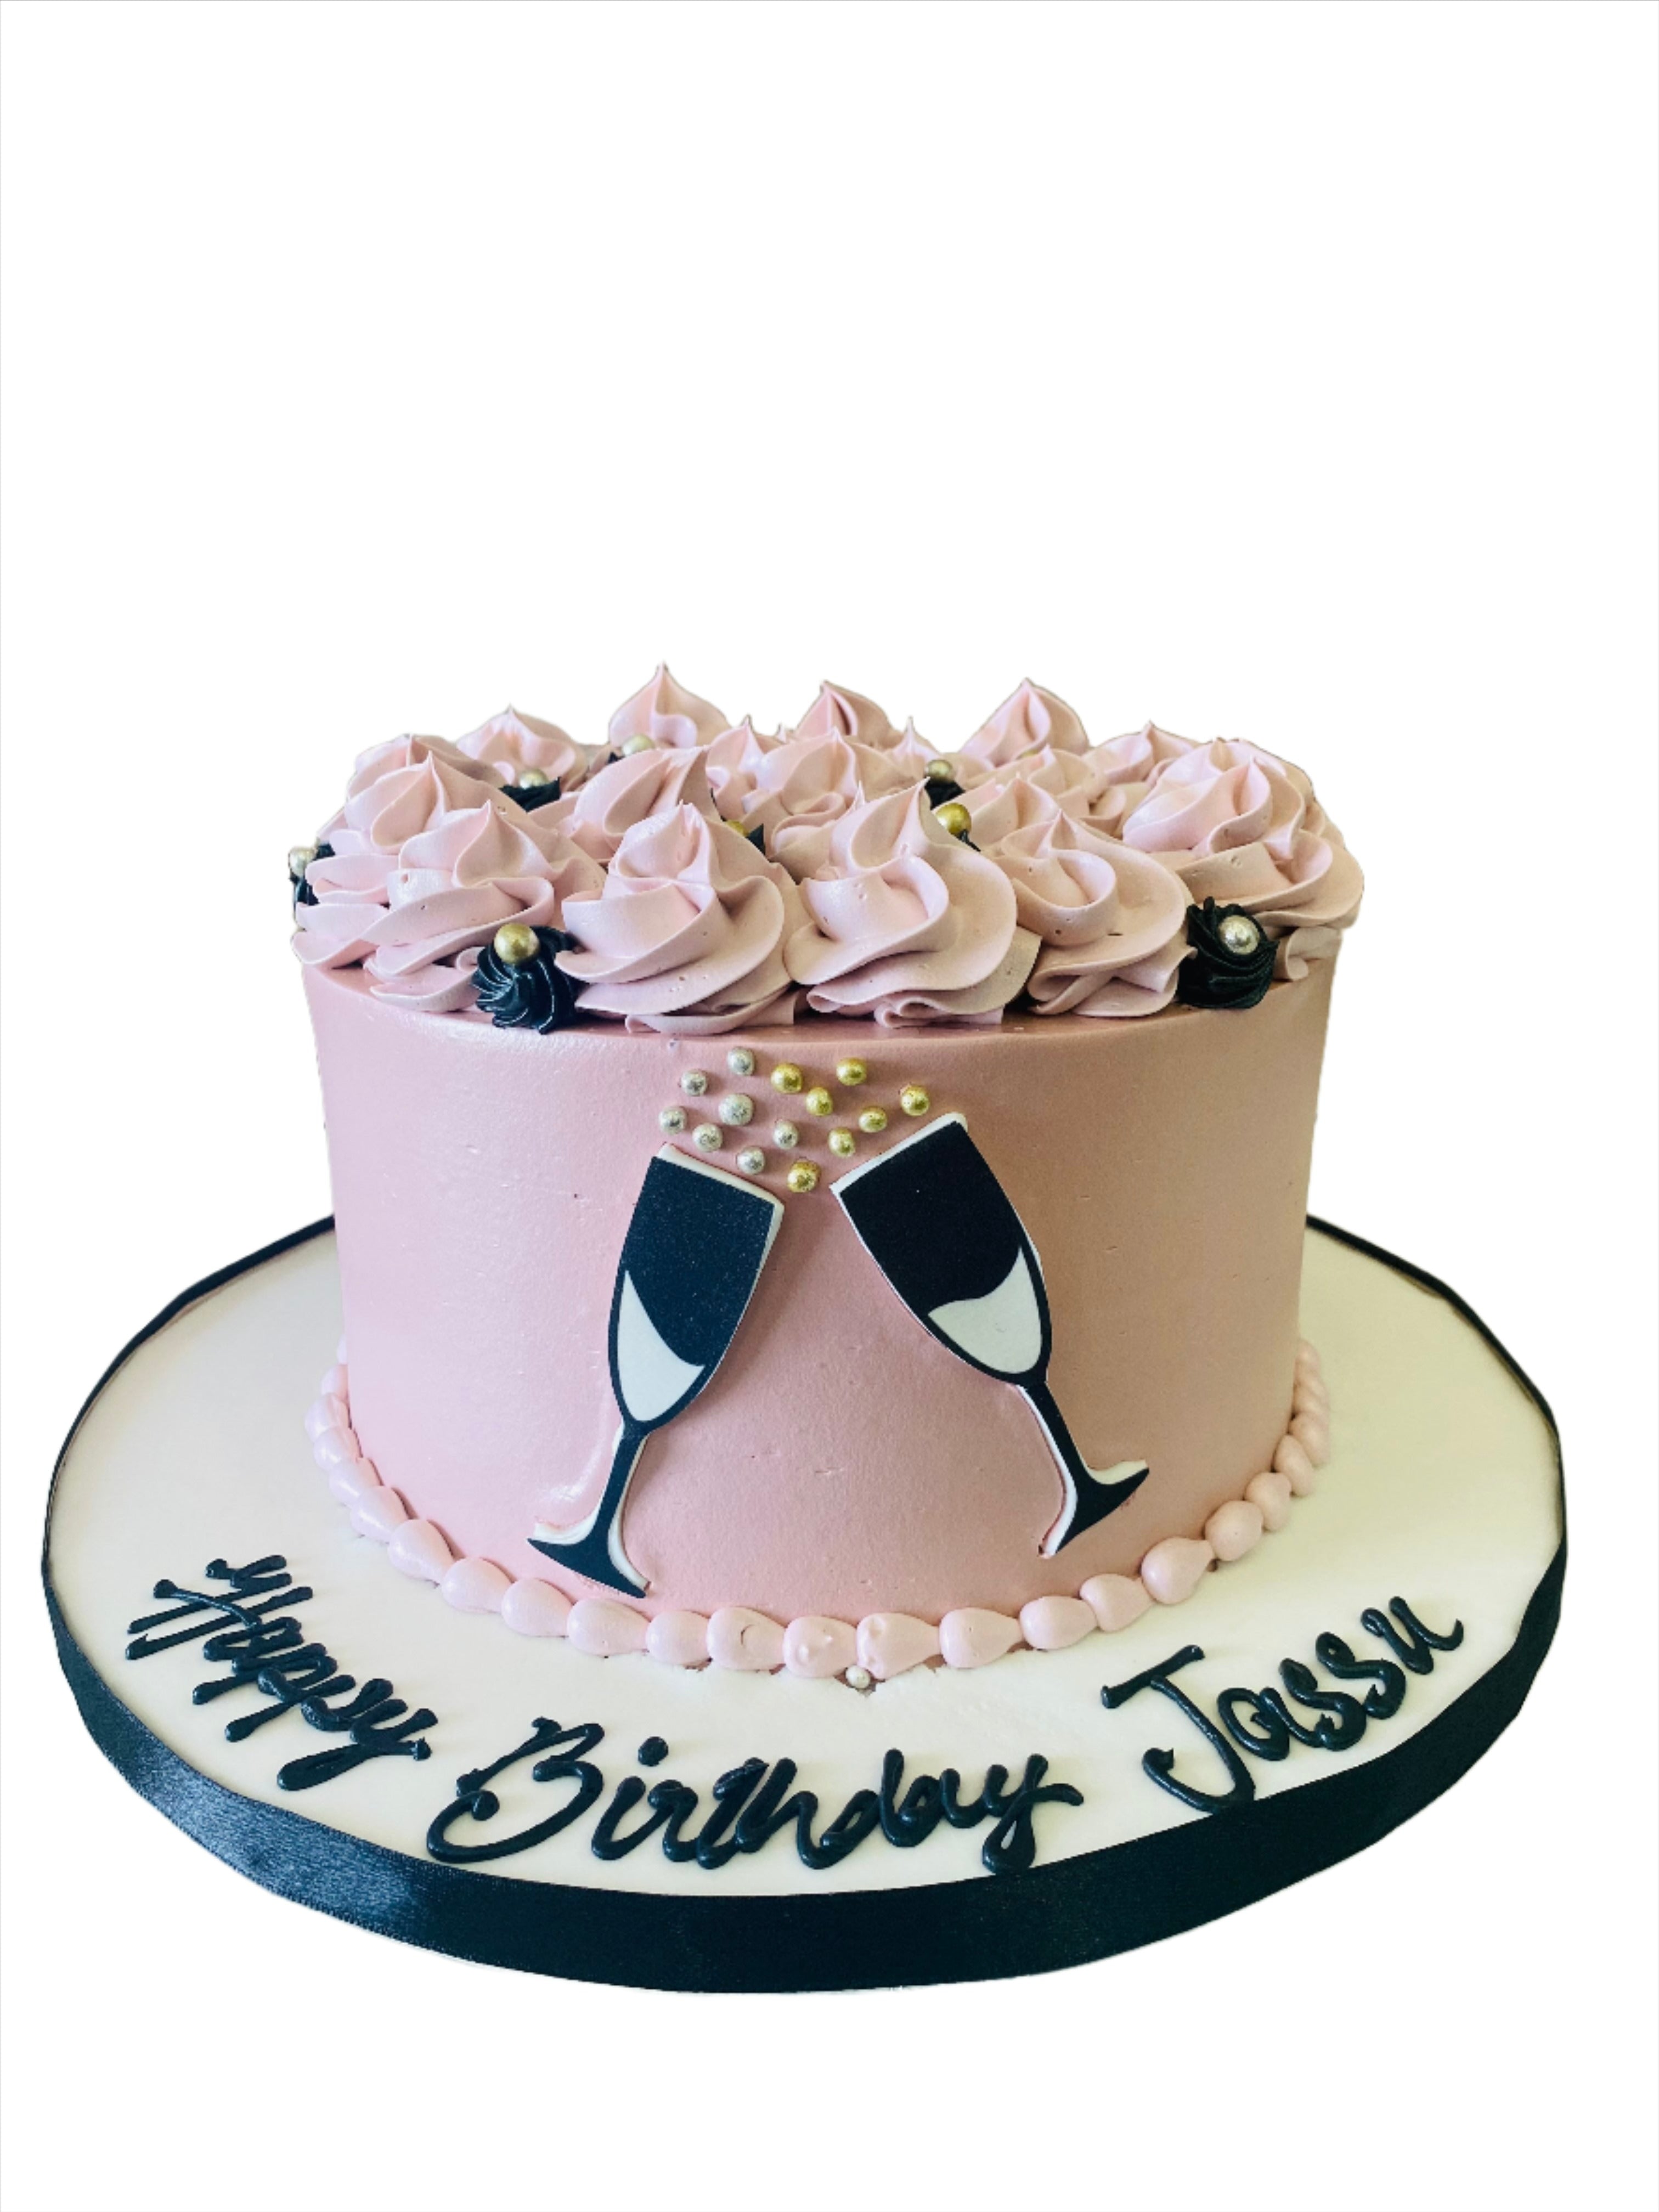 MY BAKE SHOP - EDIBLE WINE BOTTLE cake for 40th Birthday... | Facebook